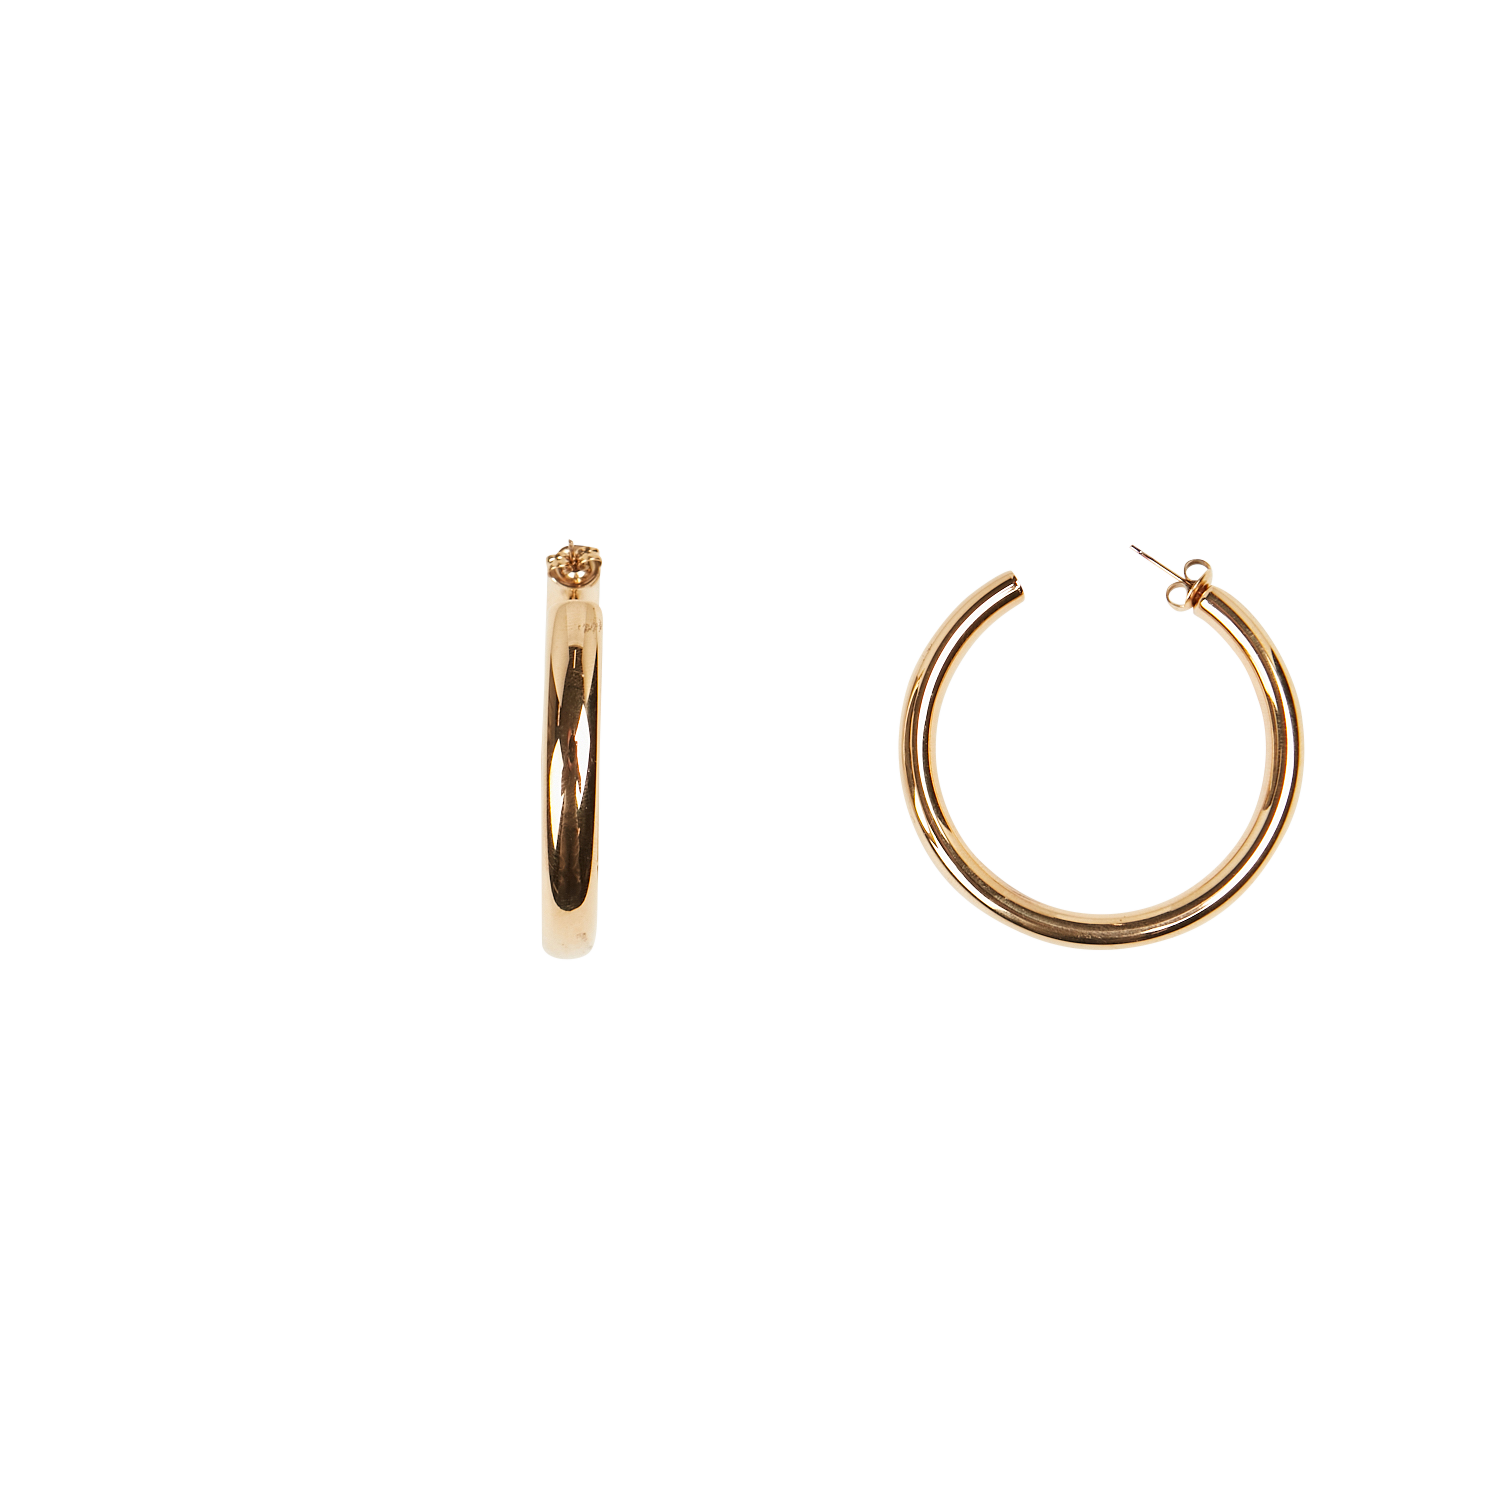 Rabatt 40 % DAMEN Accessoires Modeschmuckset Golden Größe S Golden S Blanco Doppelter offener Ring 